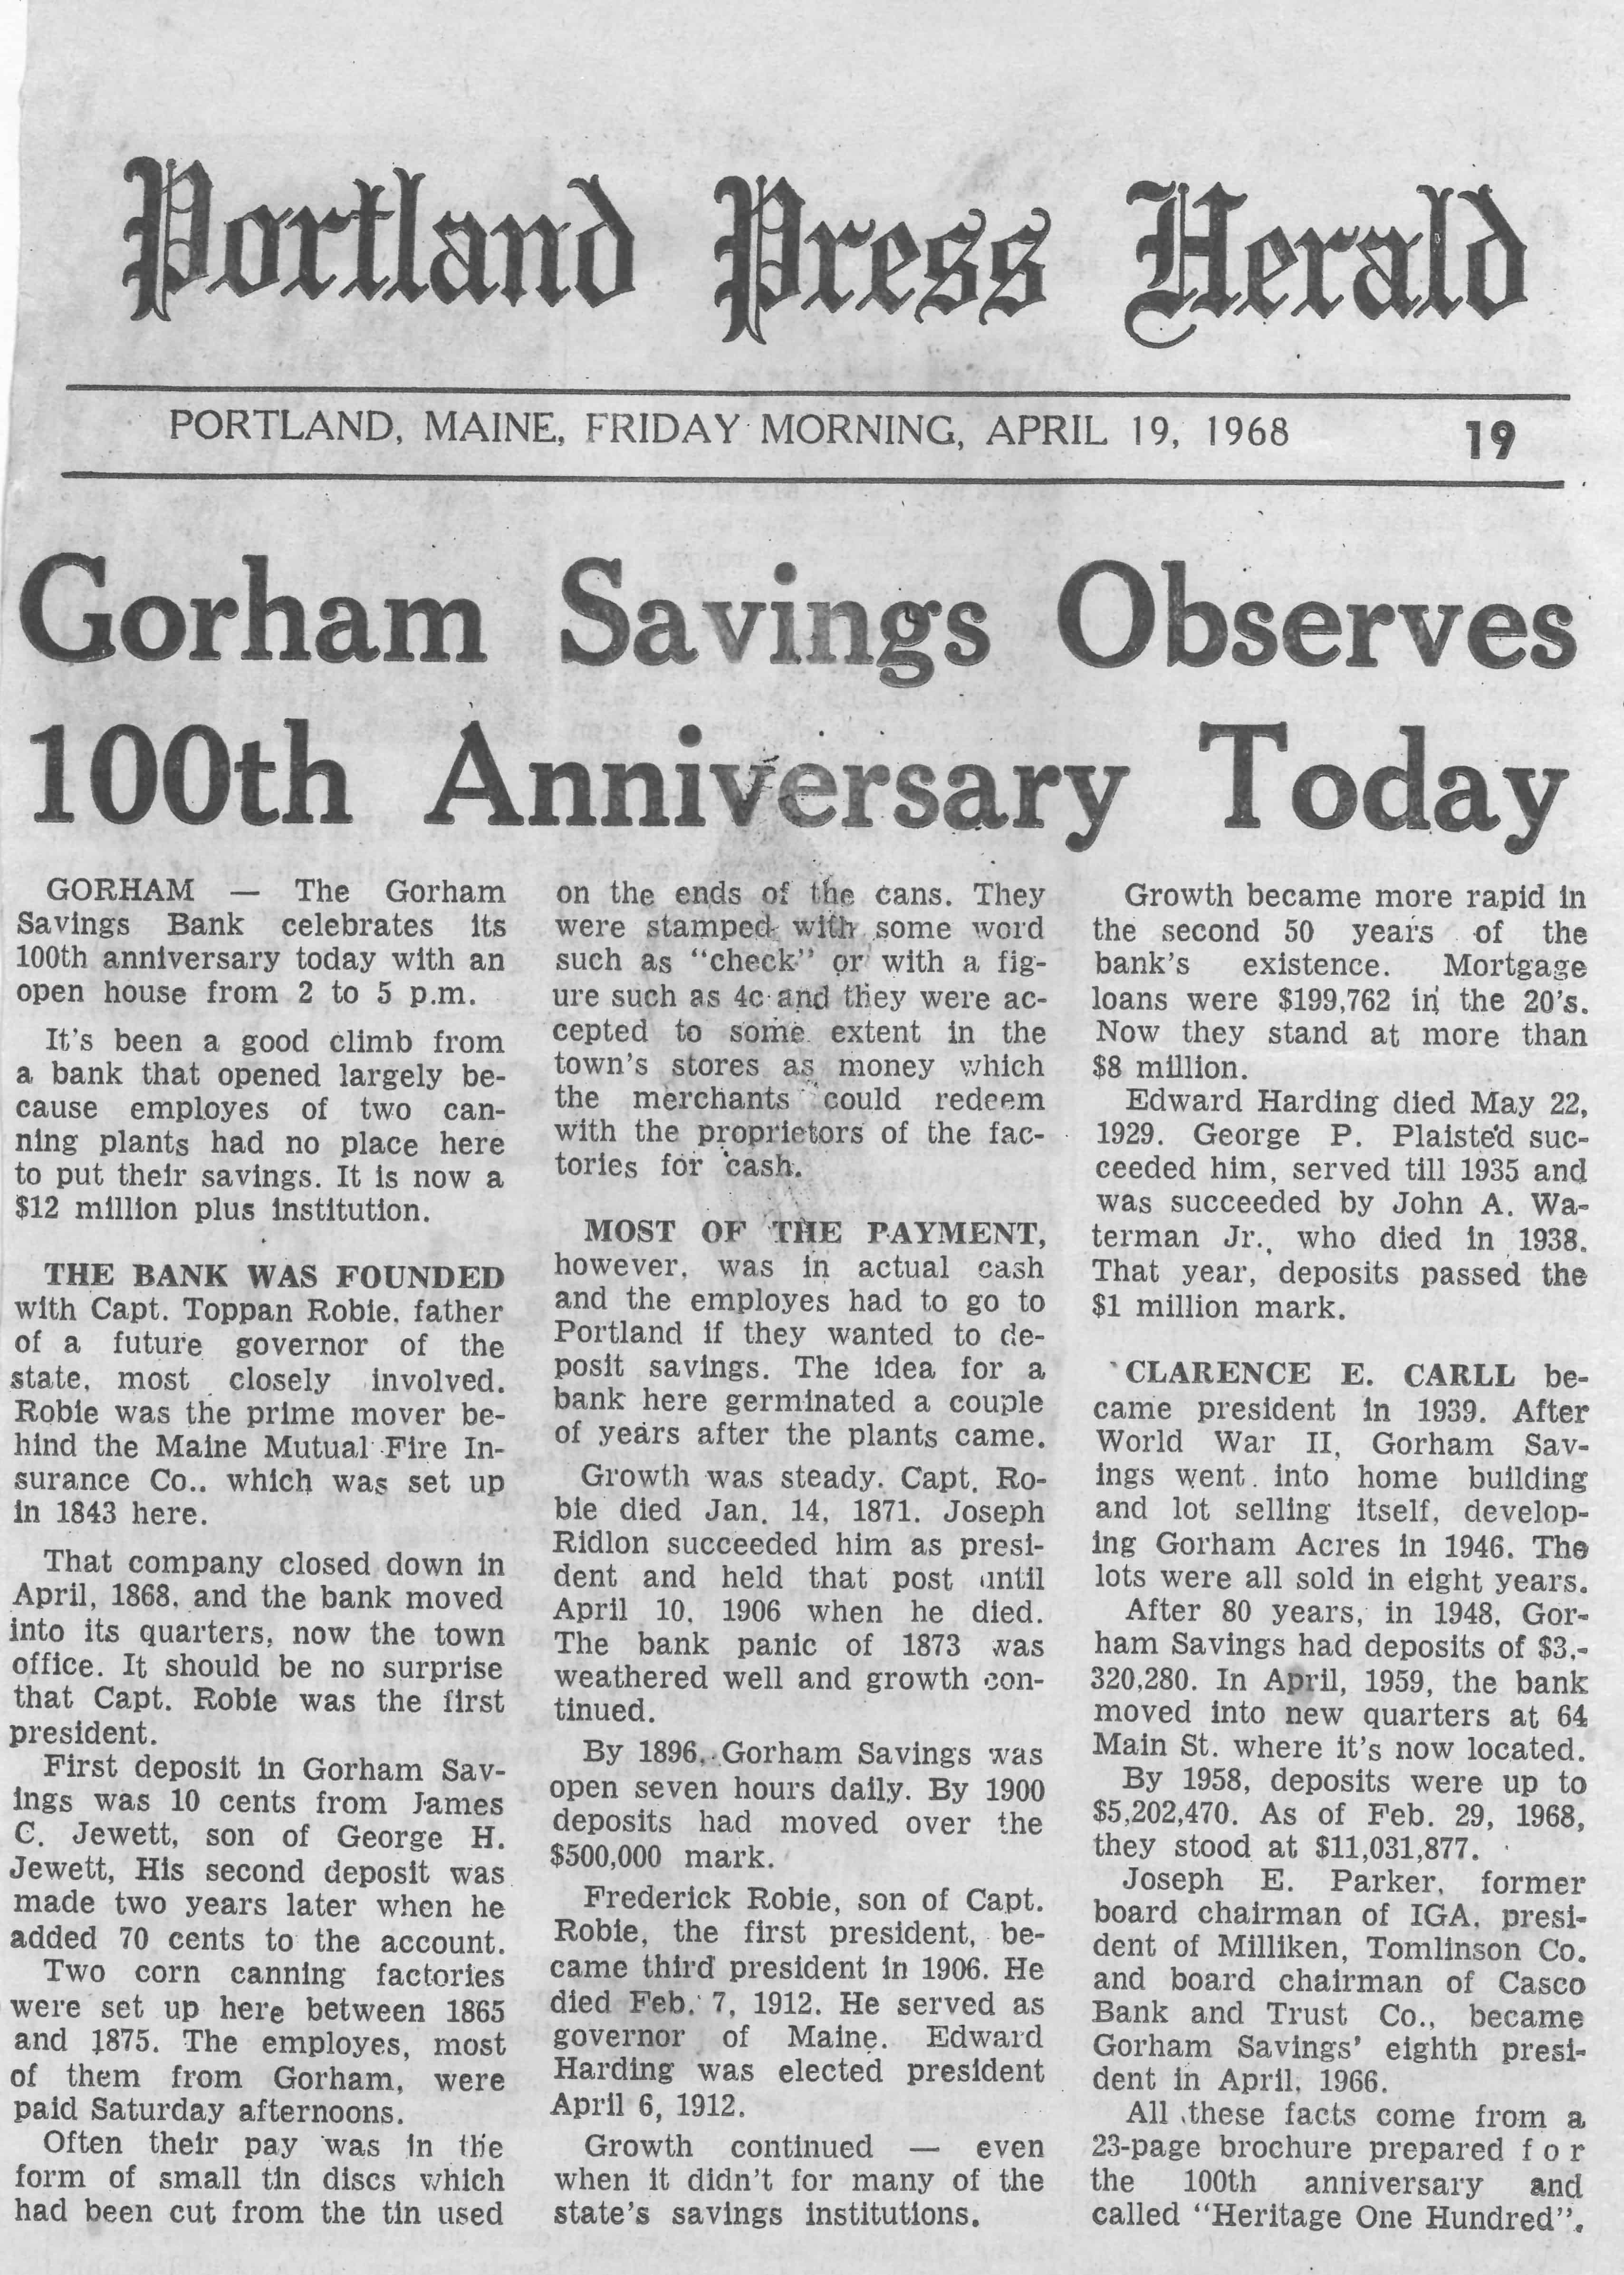 Gorham Savings Bank Celebrates 100 year anniversary